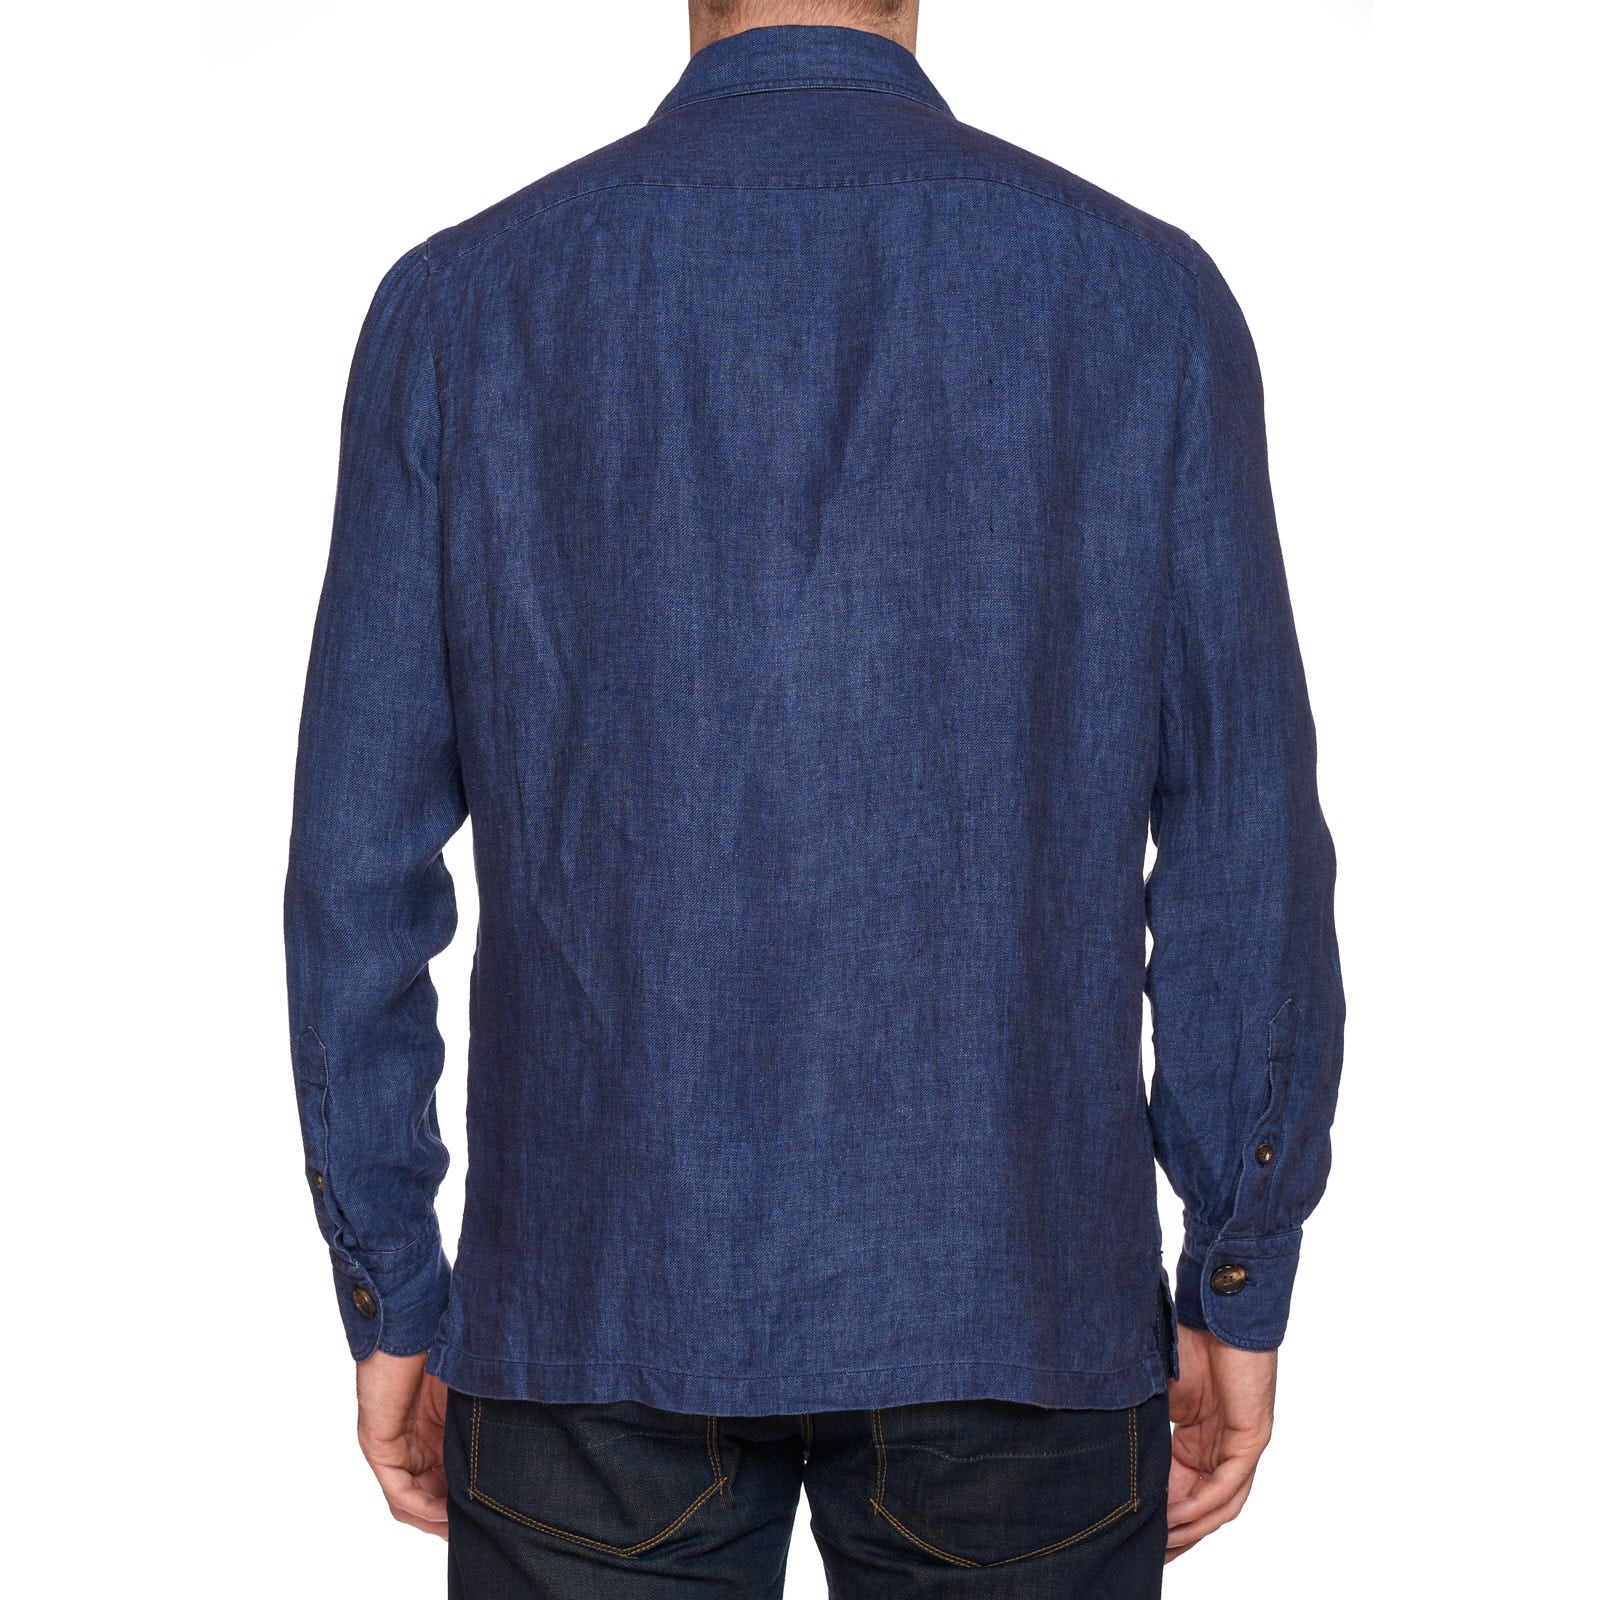 VINCENZO DI RUGGIERO Blue Linen Unlined Lightweight Field Safari Shirt Jacket NEW M VINCENZO DI RUGGIERO